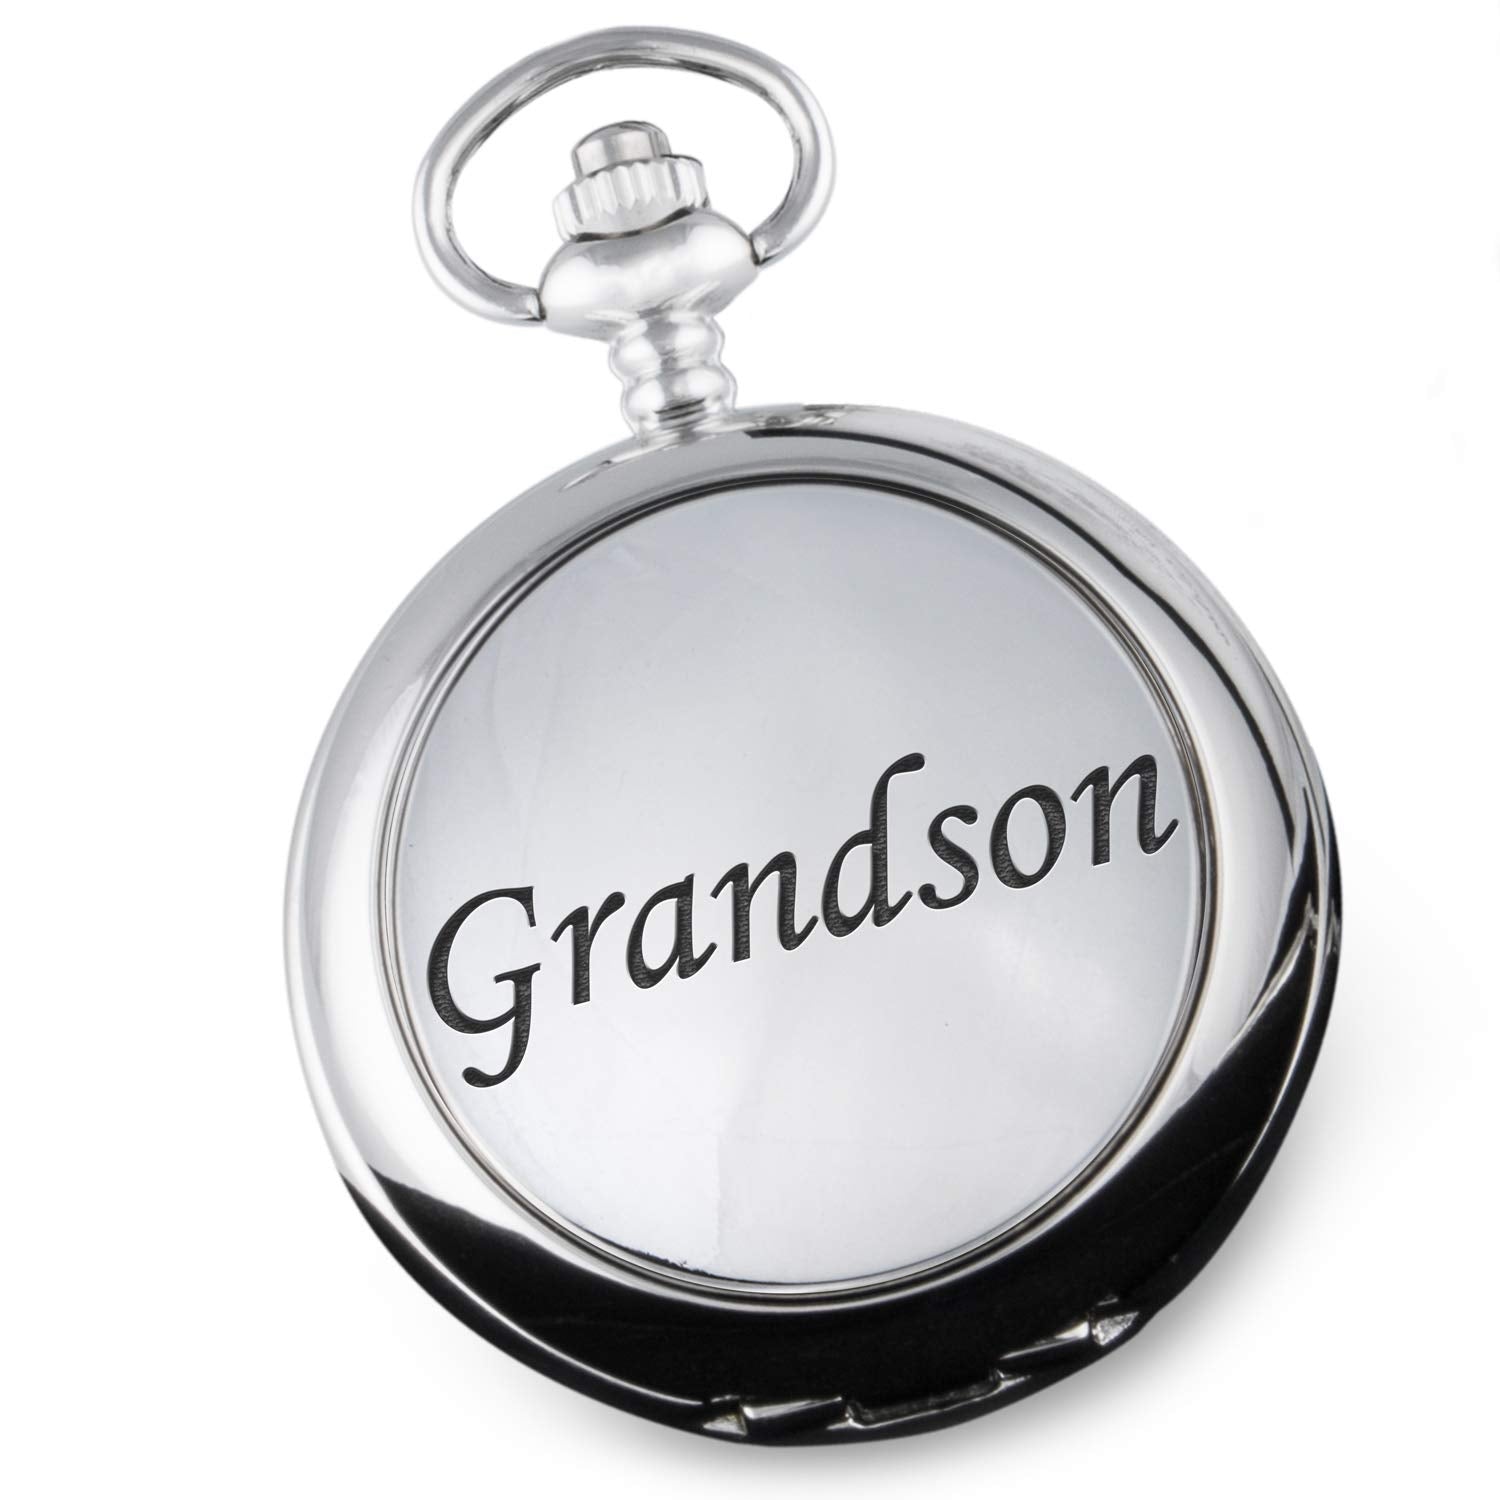 Grandson Pocket Watch Christening Birthday Wedding Christmas Gifts